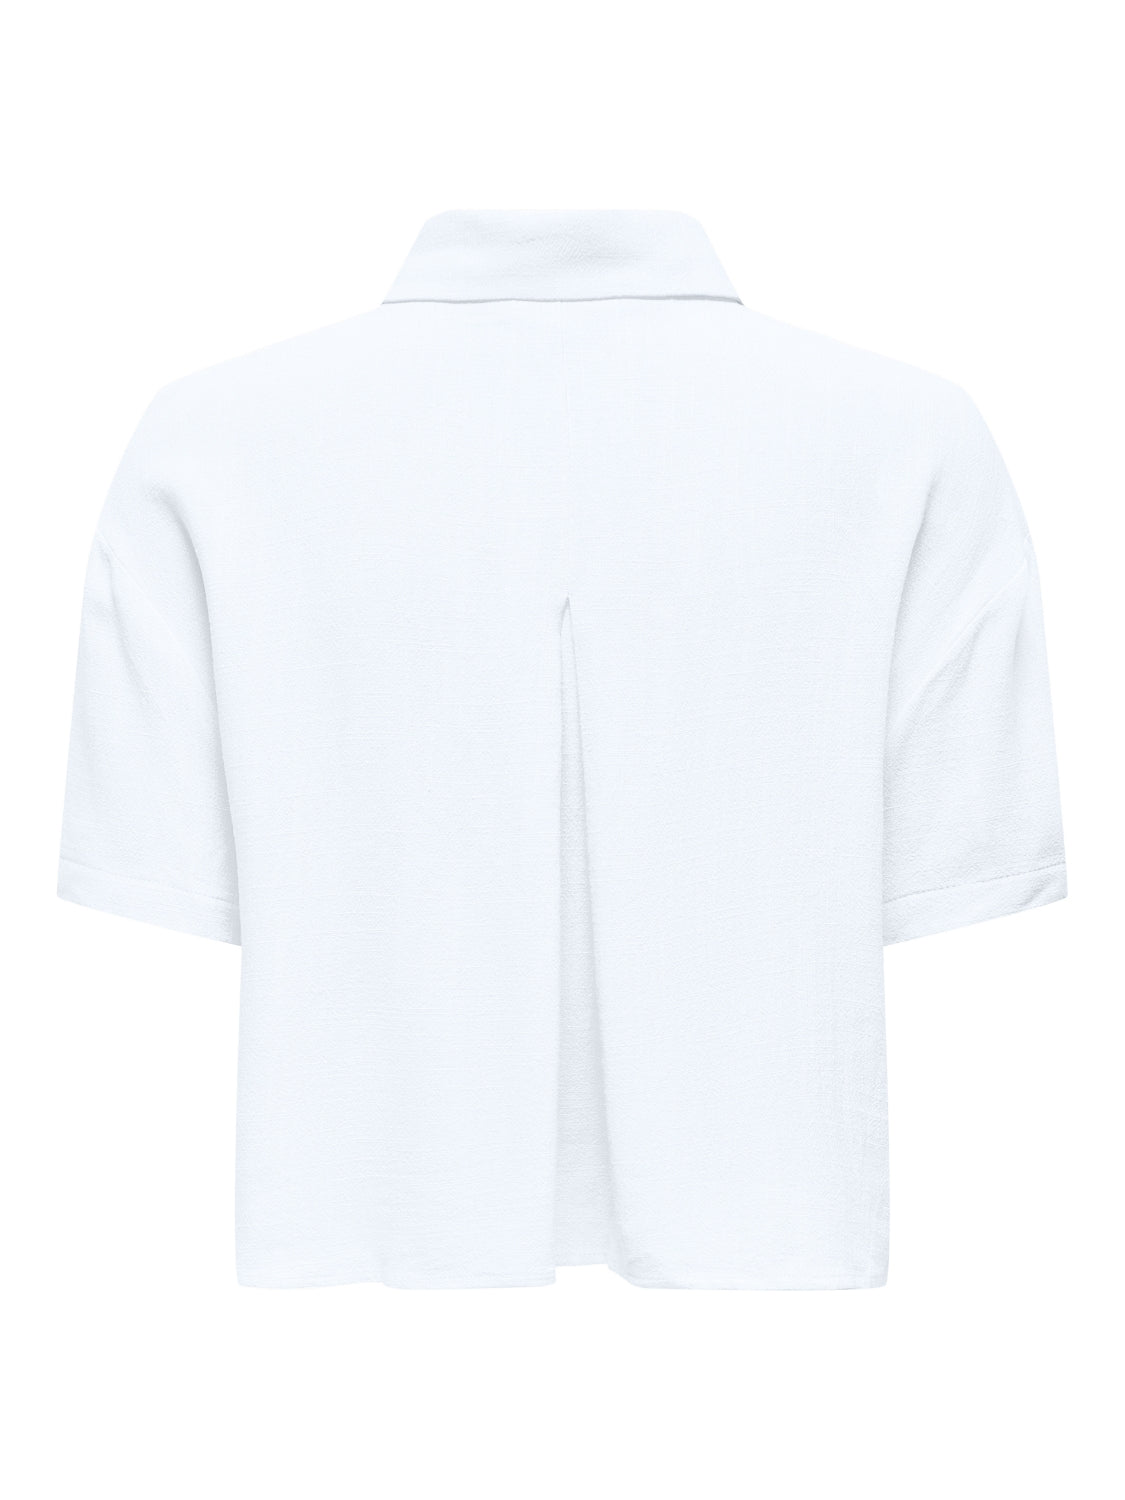 Siesta Boxy Linen Shirt